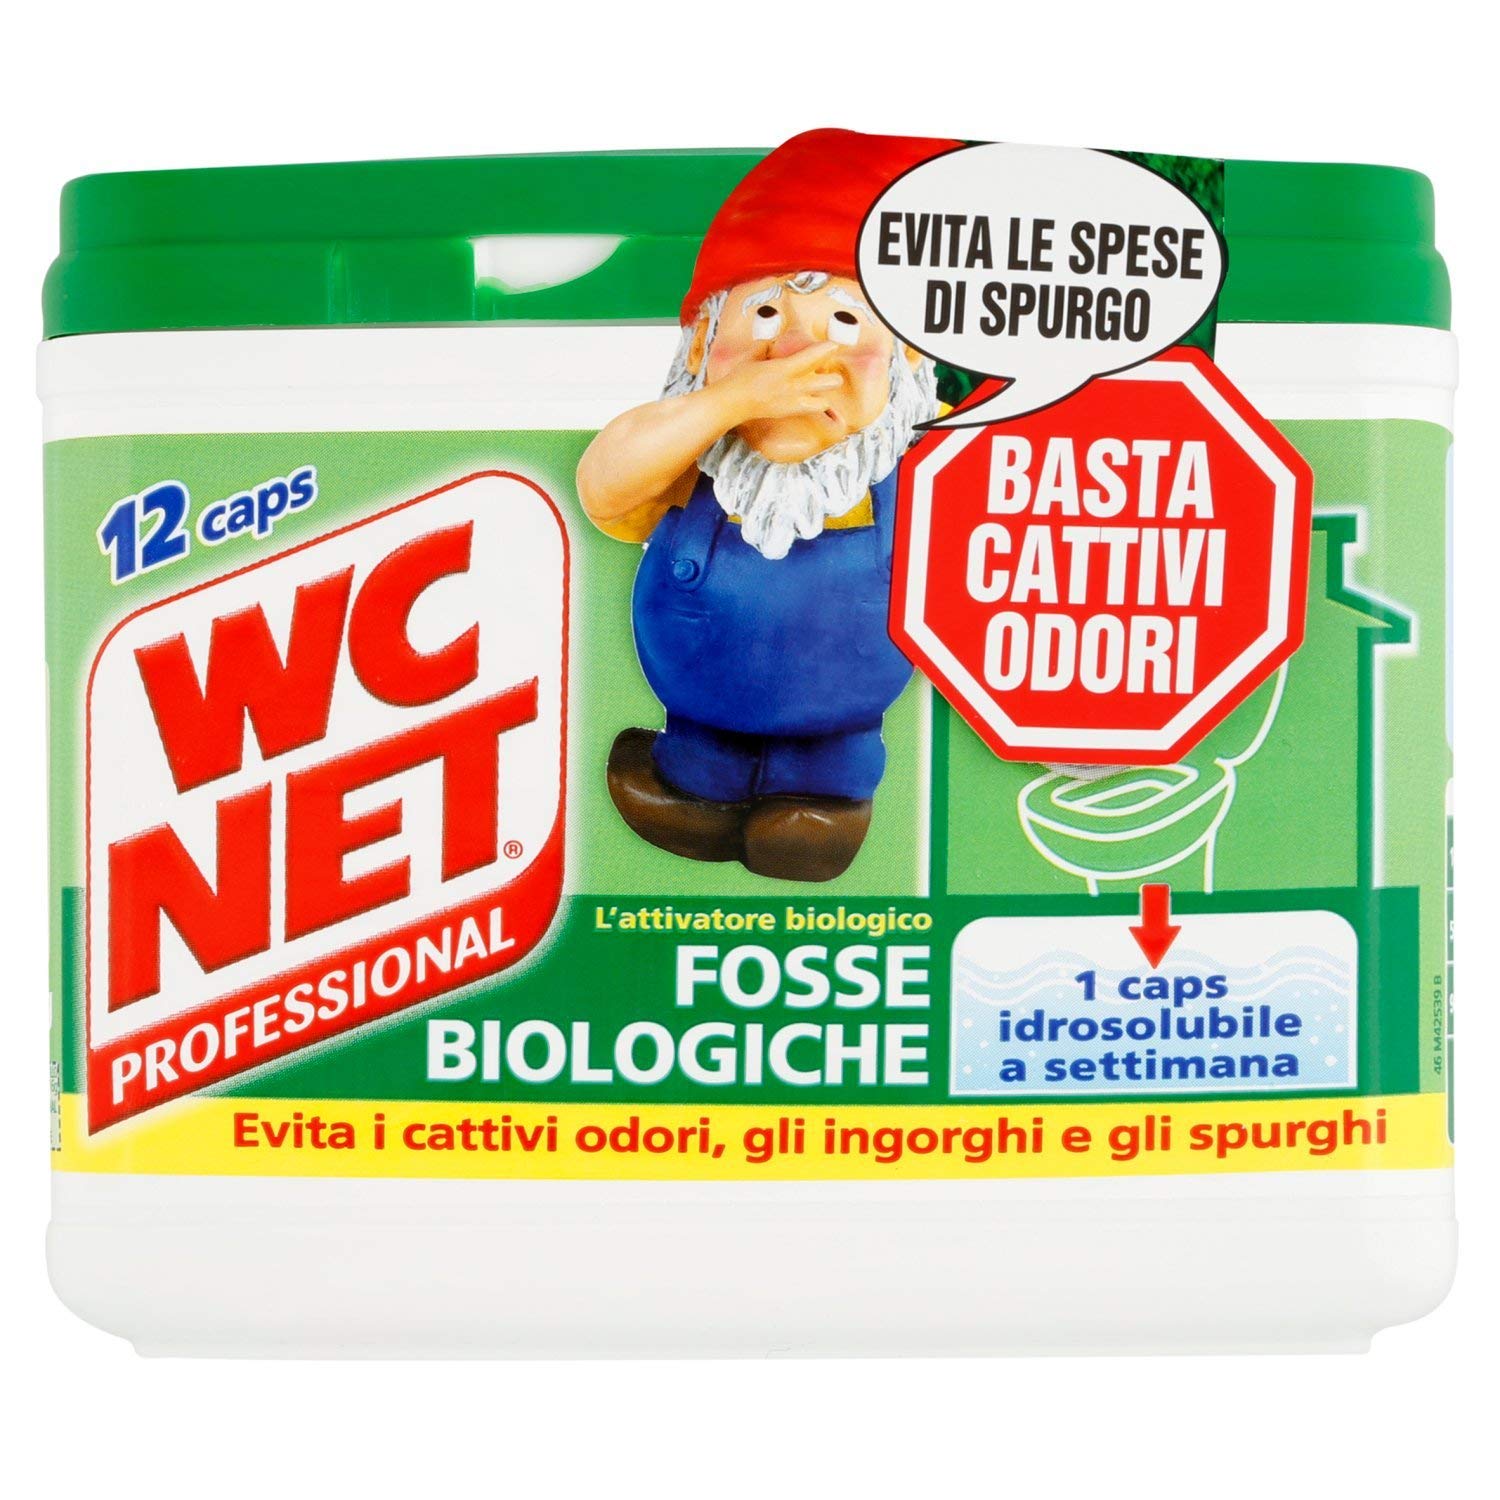 Wc Net Fosse Biologiche 12 caps - Piazza Mercato Casa